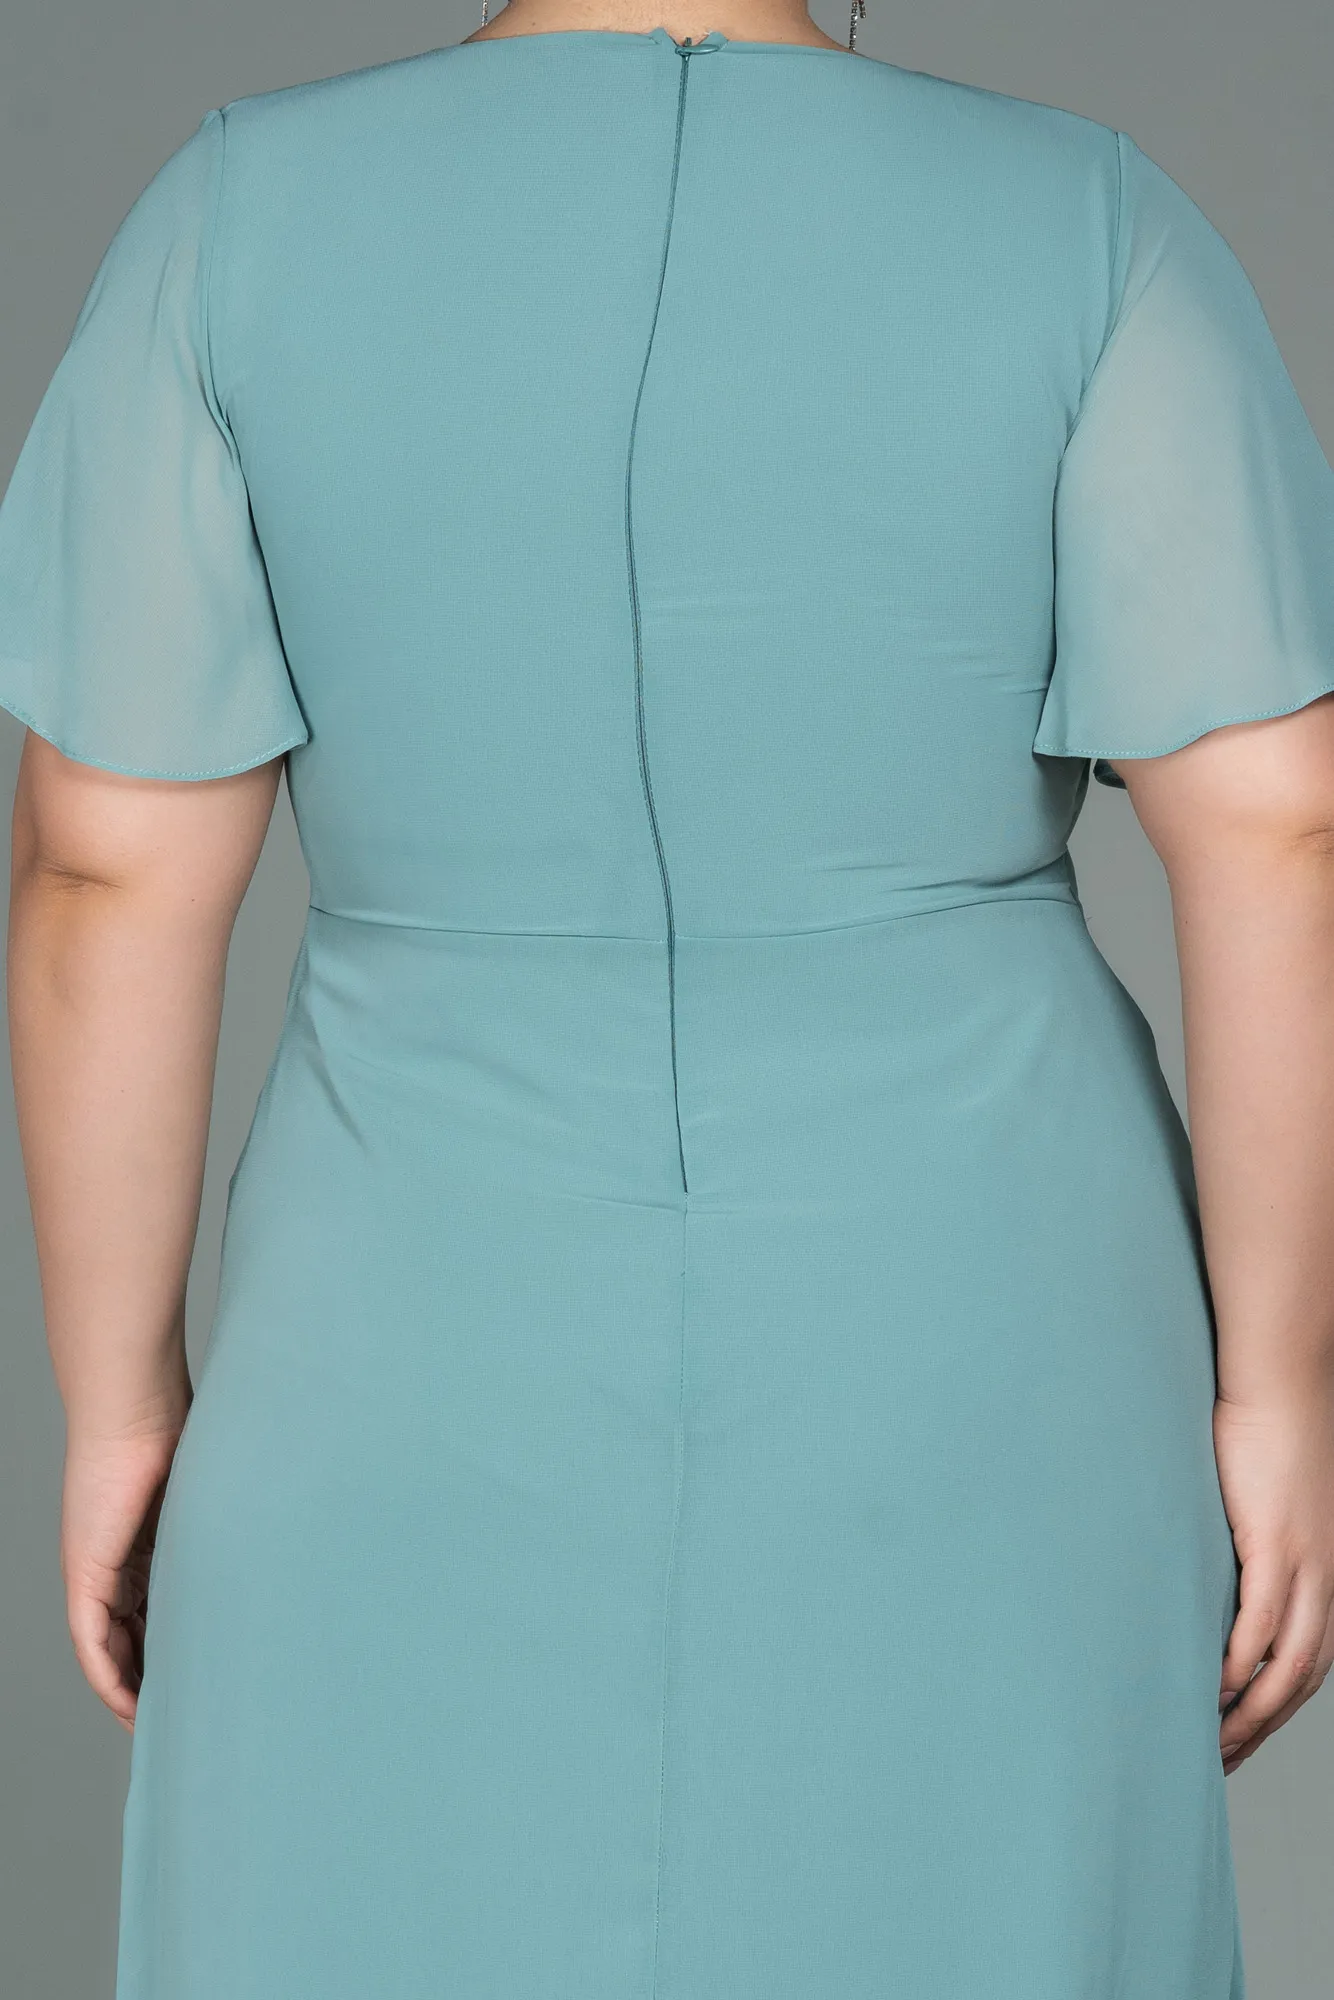 Turquoise-Midi Chiffon Plus Size Evening Dress ABK1660